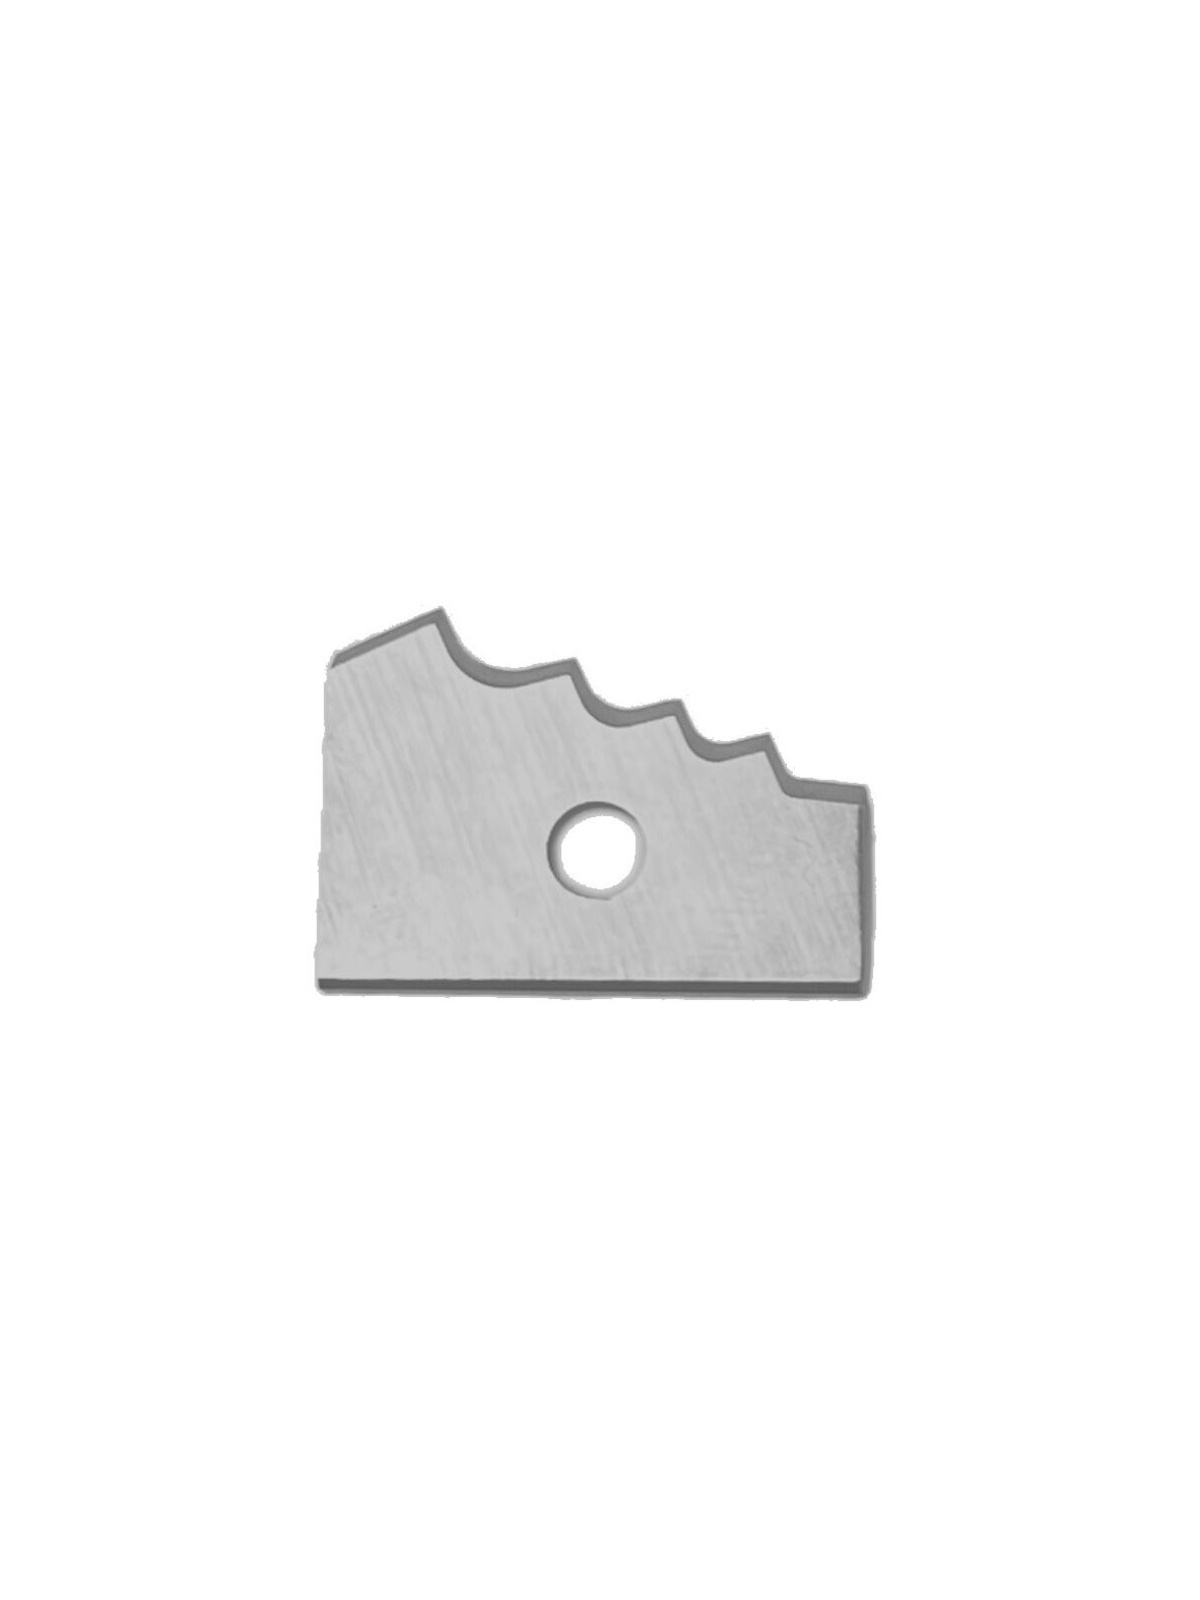 Wirutex Knife in HW 25x19.6x2 R1.5/2/3 N3402N0036 Wirutex | JVL-Europe